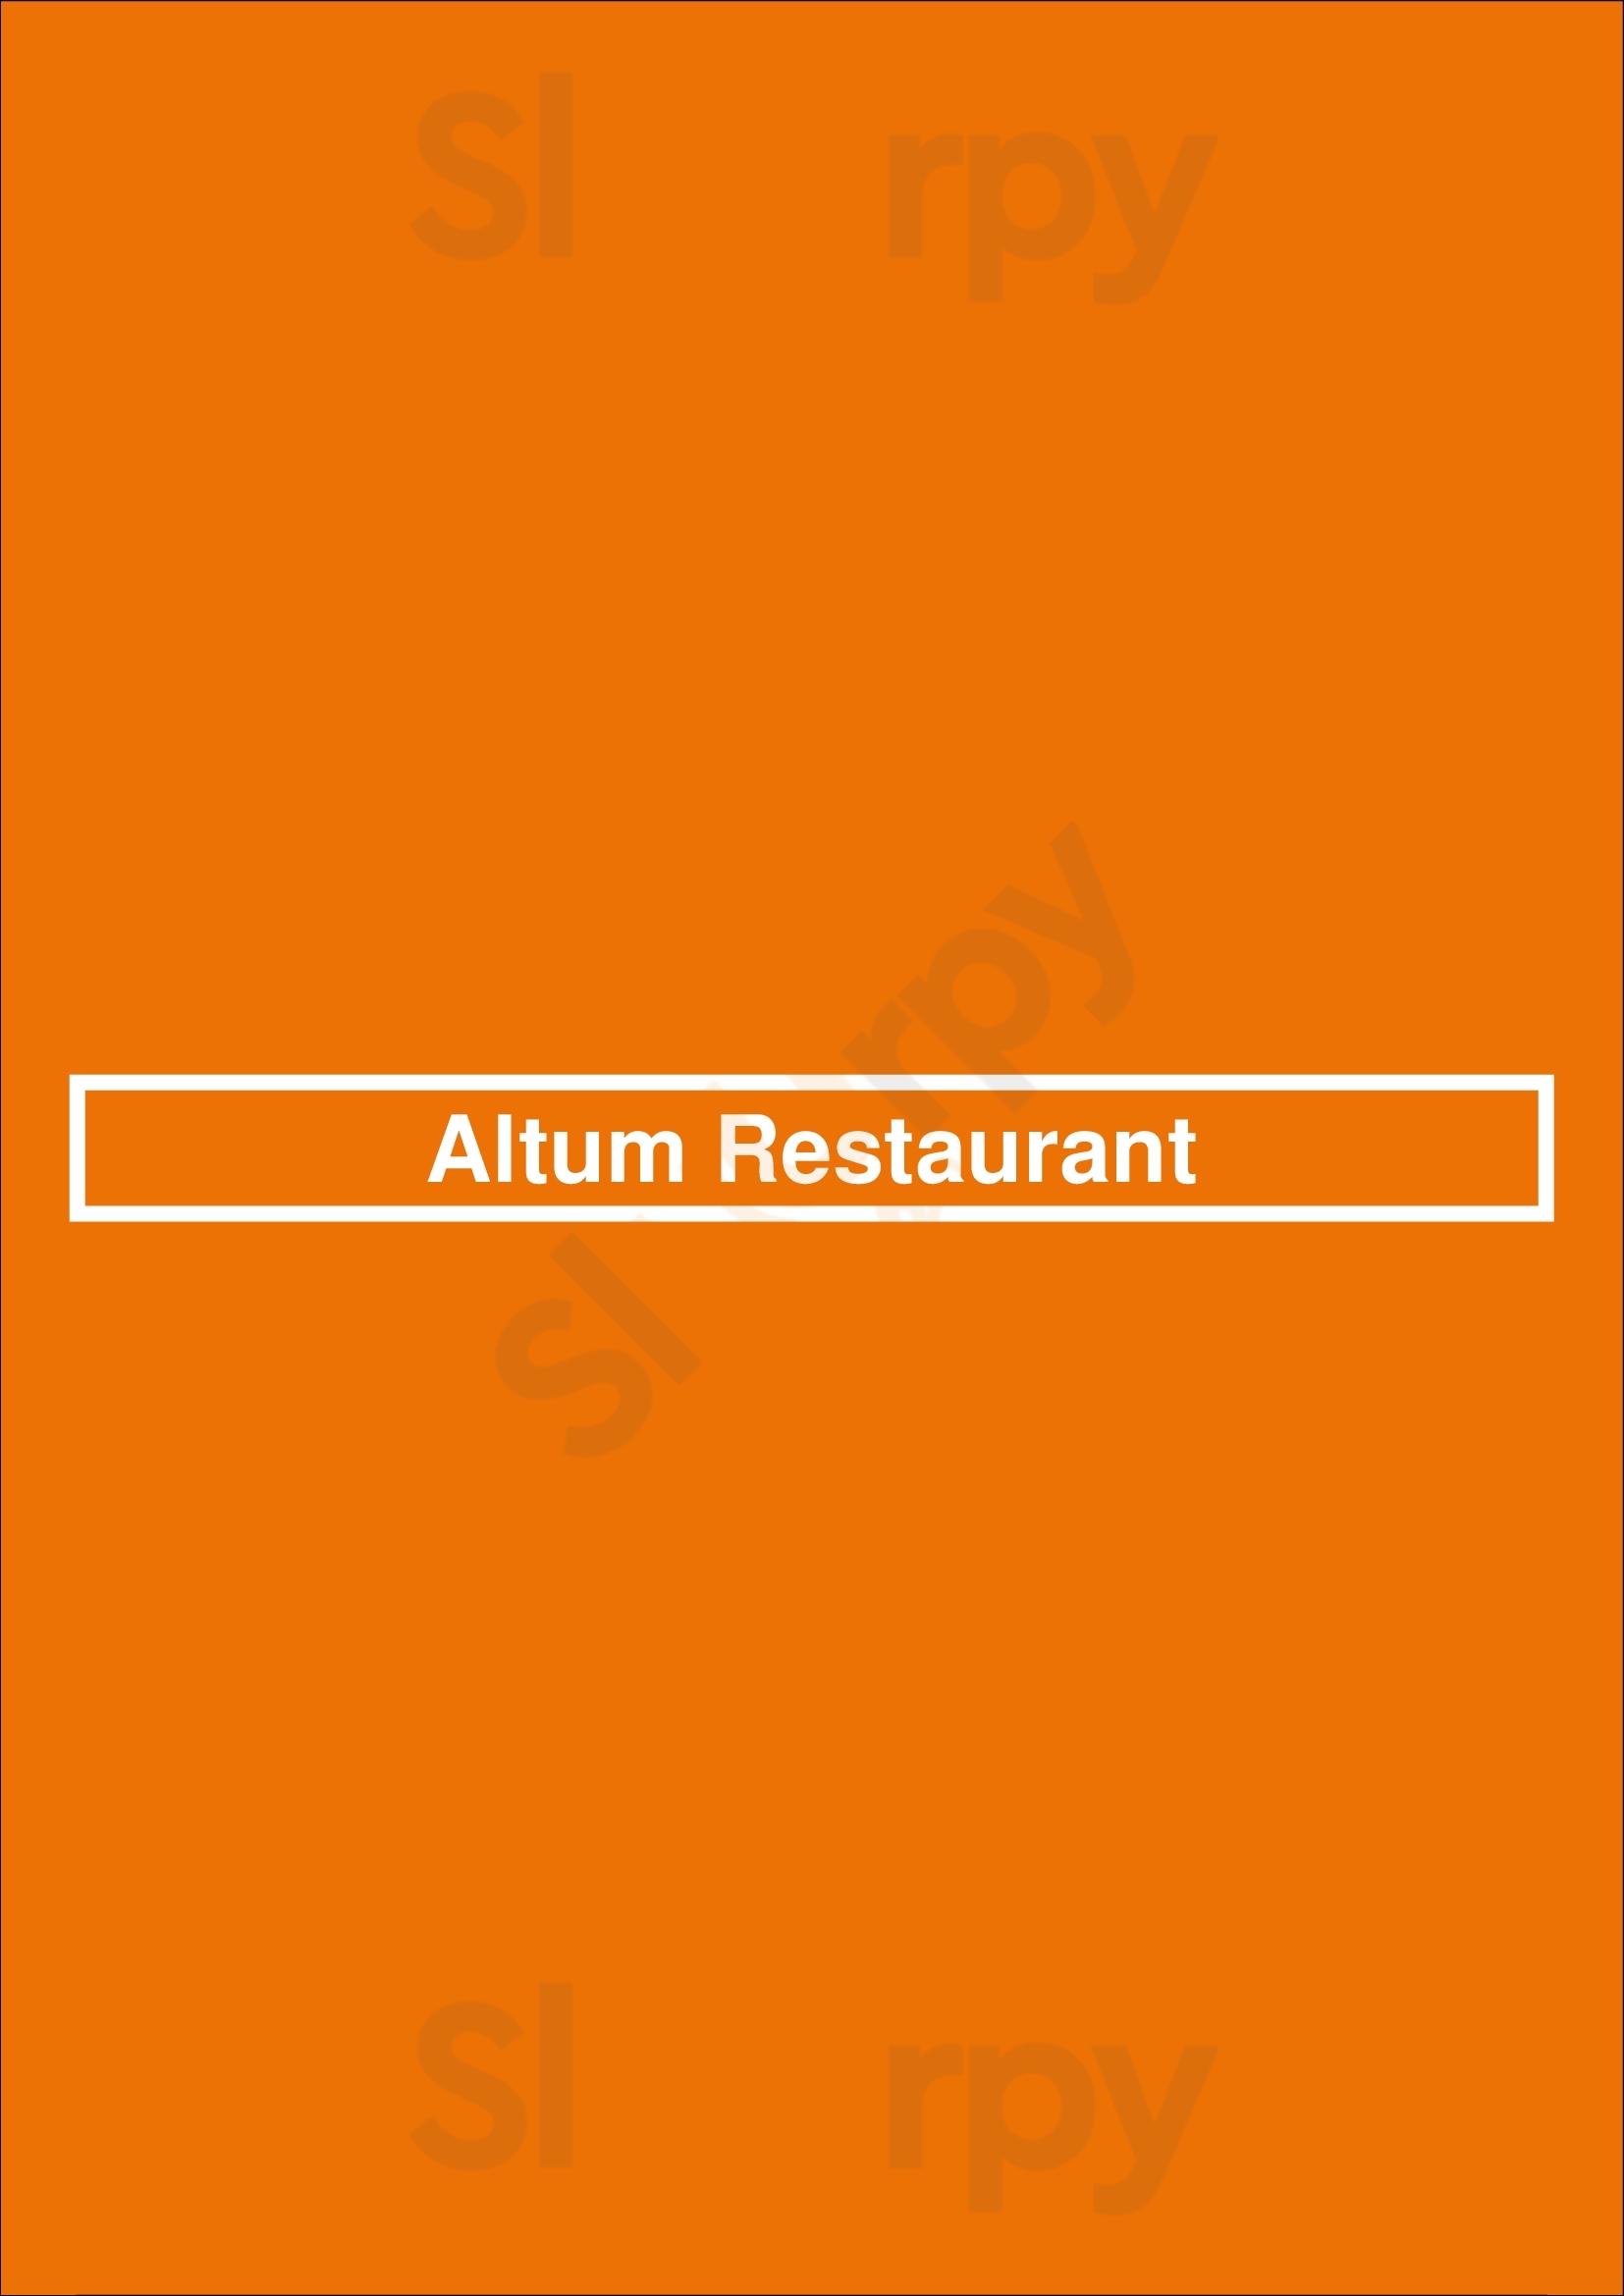 Altum Restaurant Milsons Point Menu - 1